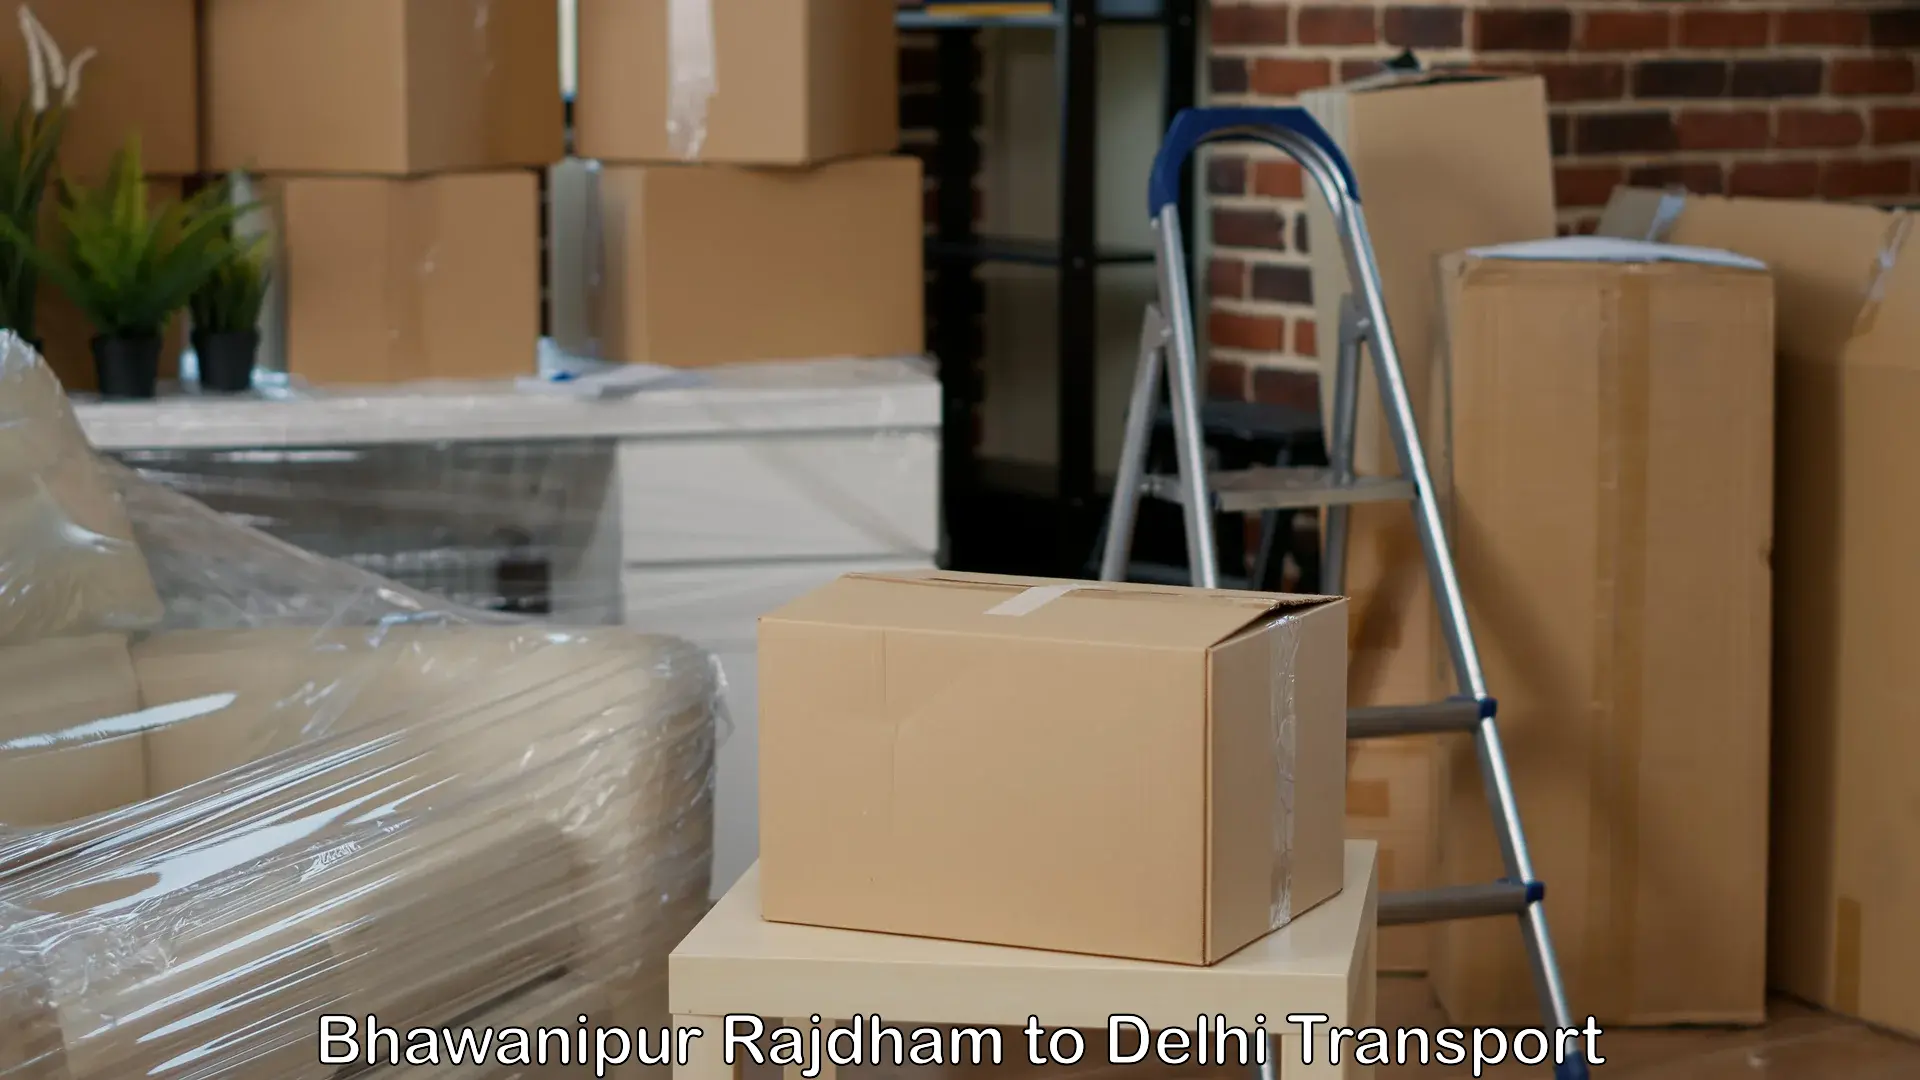 Daily parcel service transport Bhawanipur Rajdham to University of Delhi